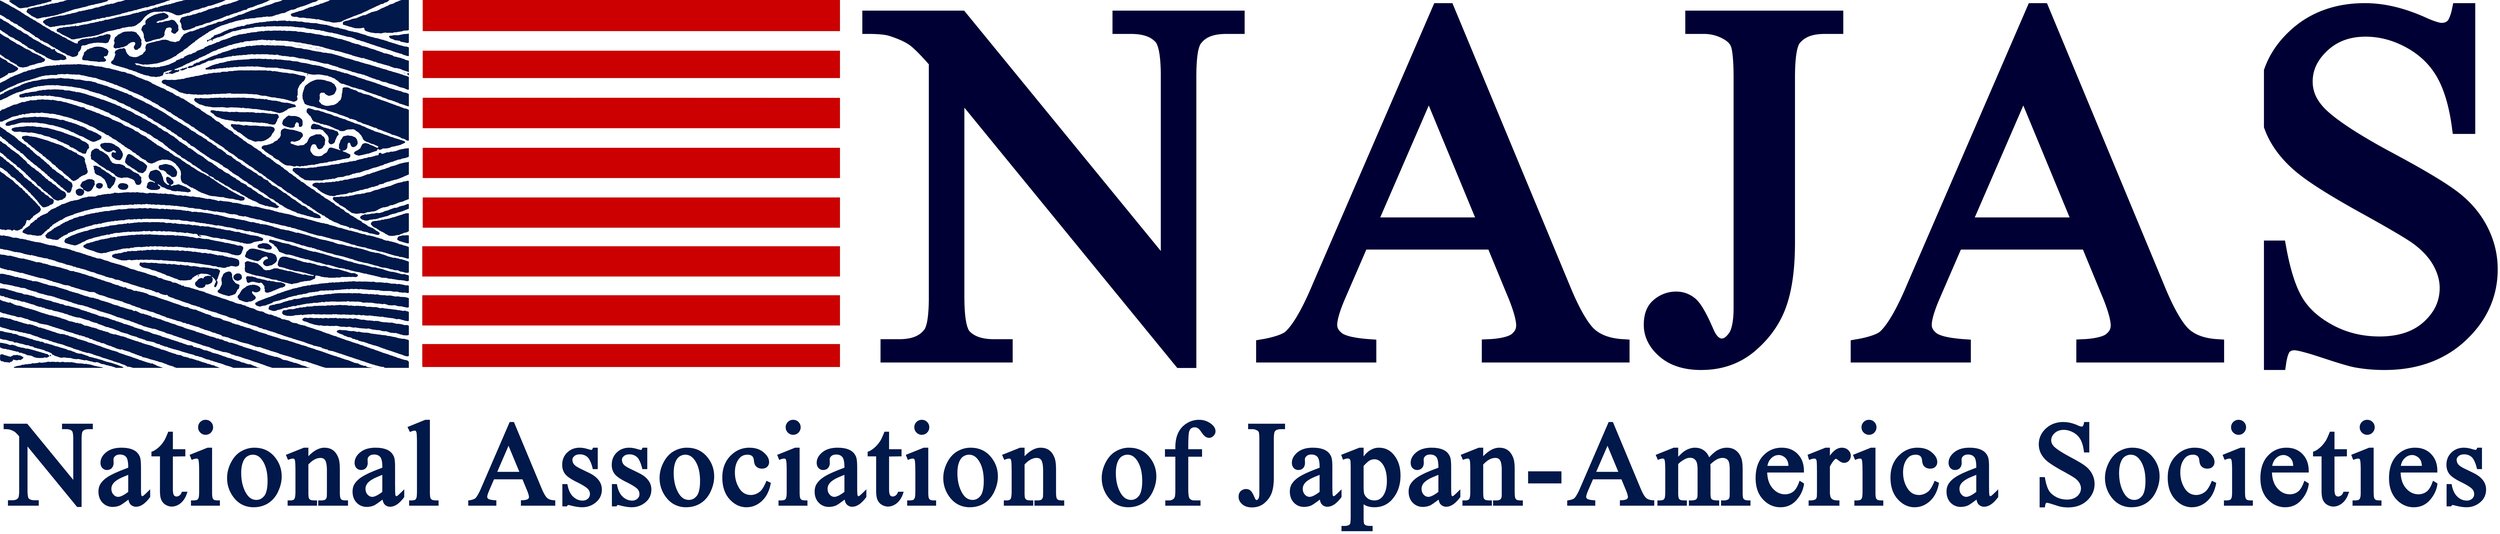 NAJAS logo-highres.jpg